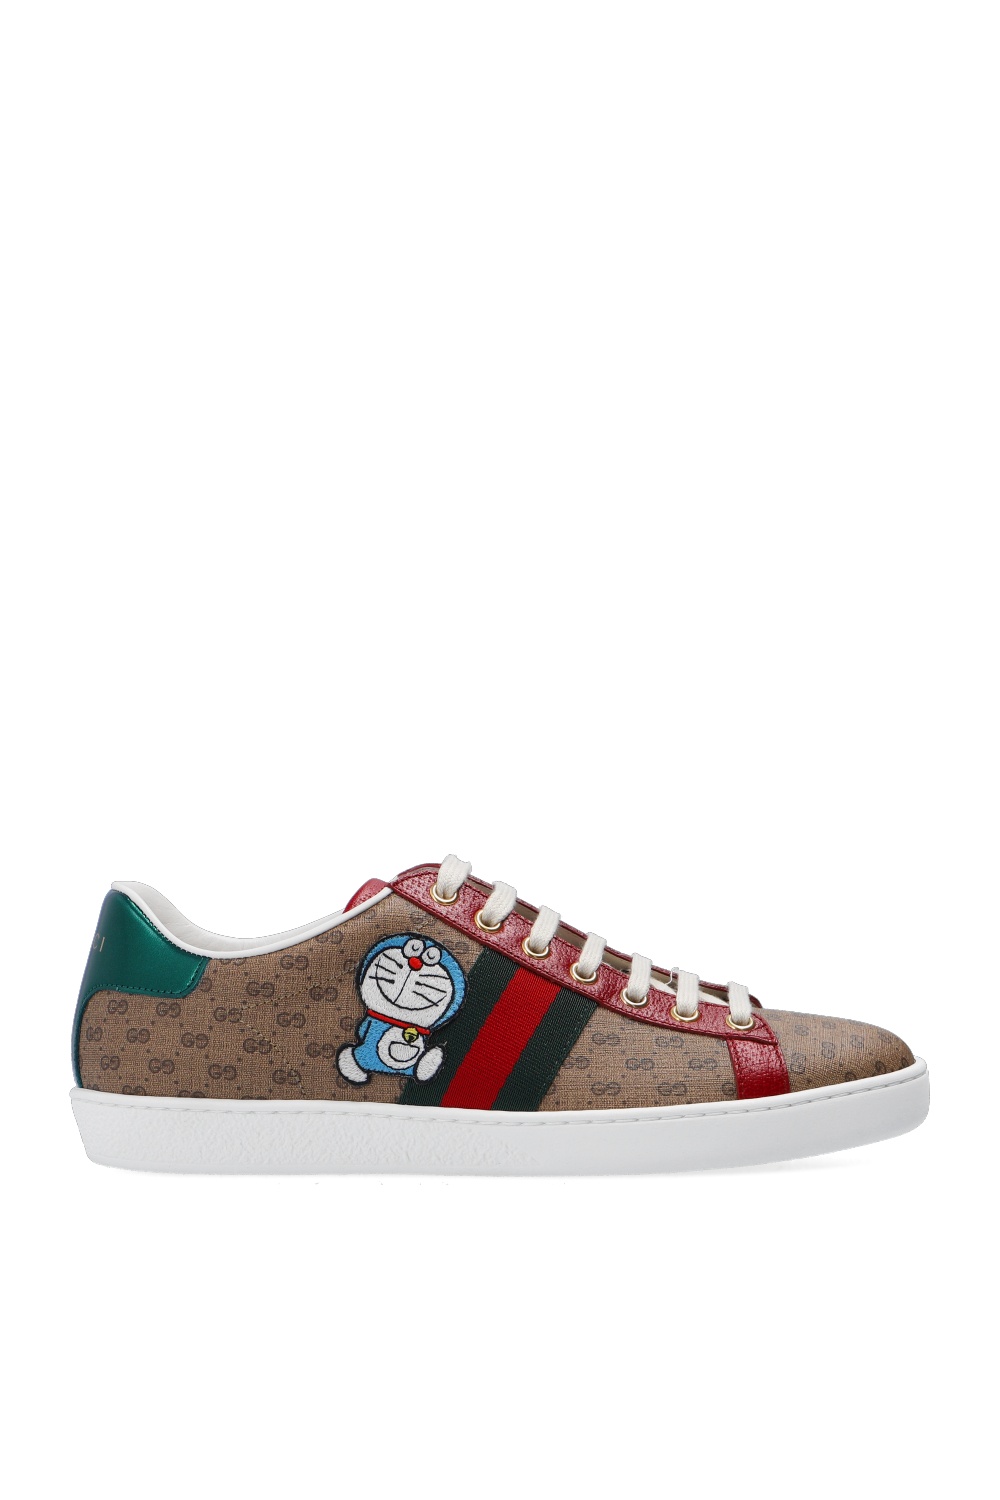 Gucci Doraemon x Gucci | Women's Shoes | tachones adidas 2018 